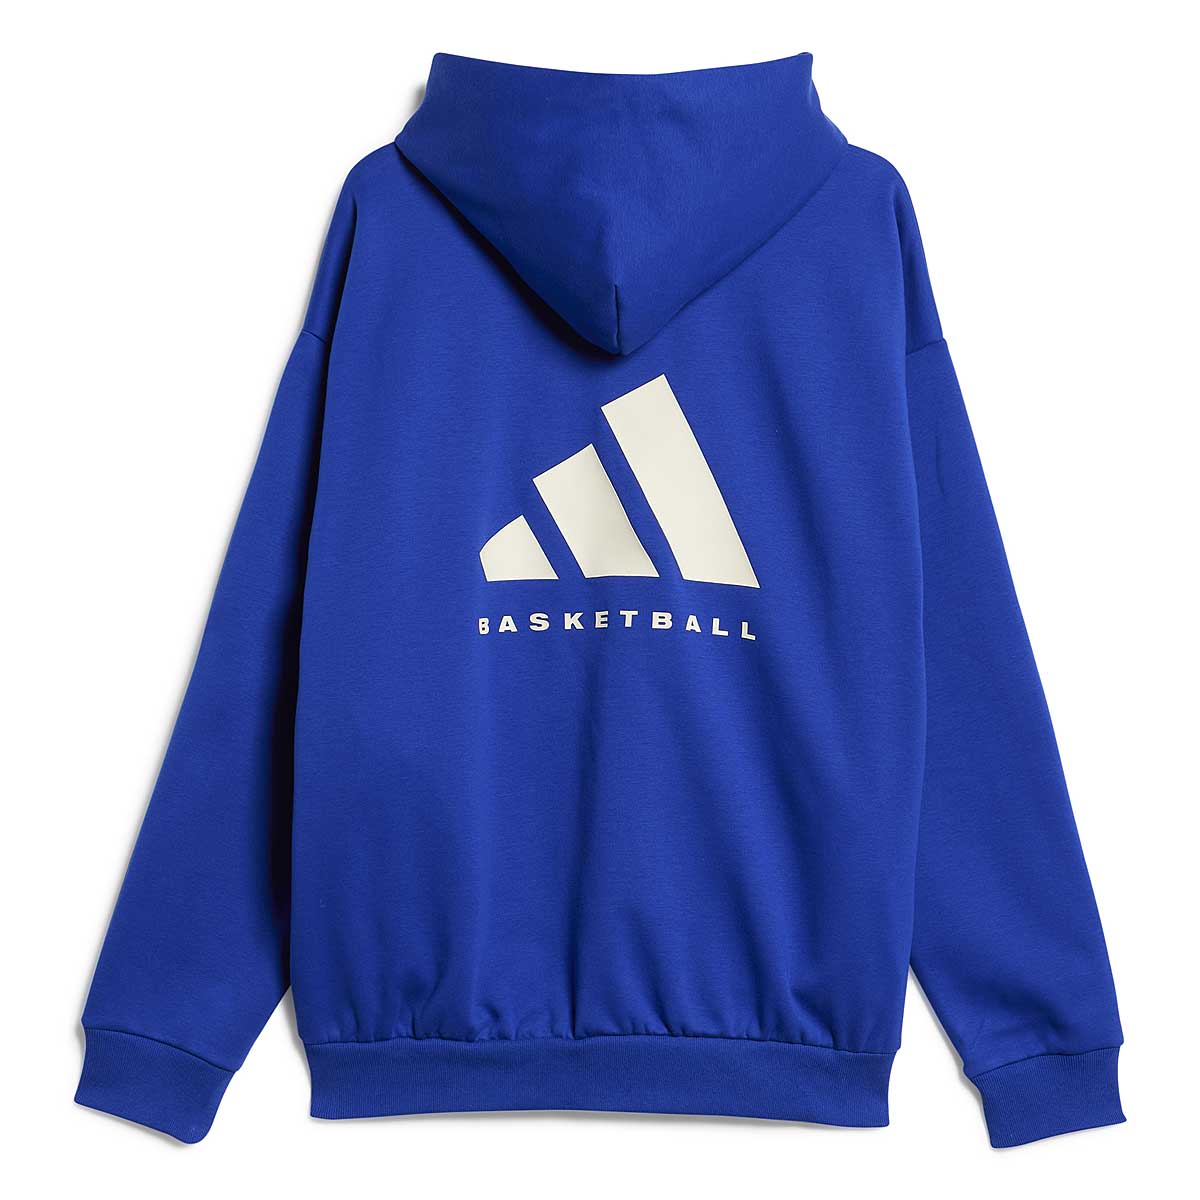 Image of Adidas Basketball Hoody, Blue